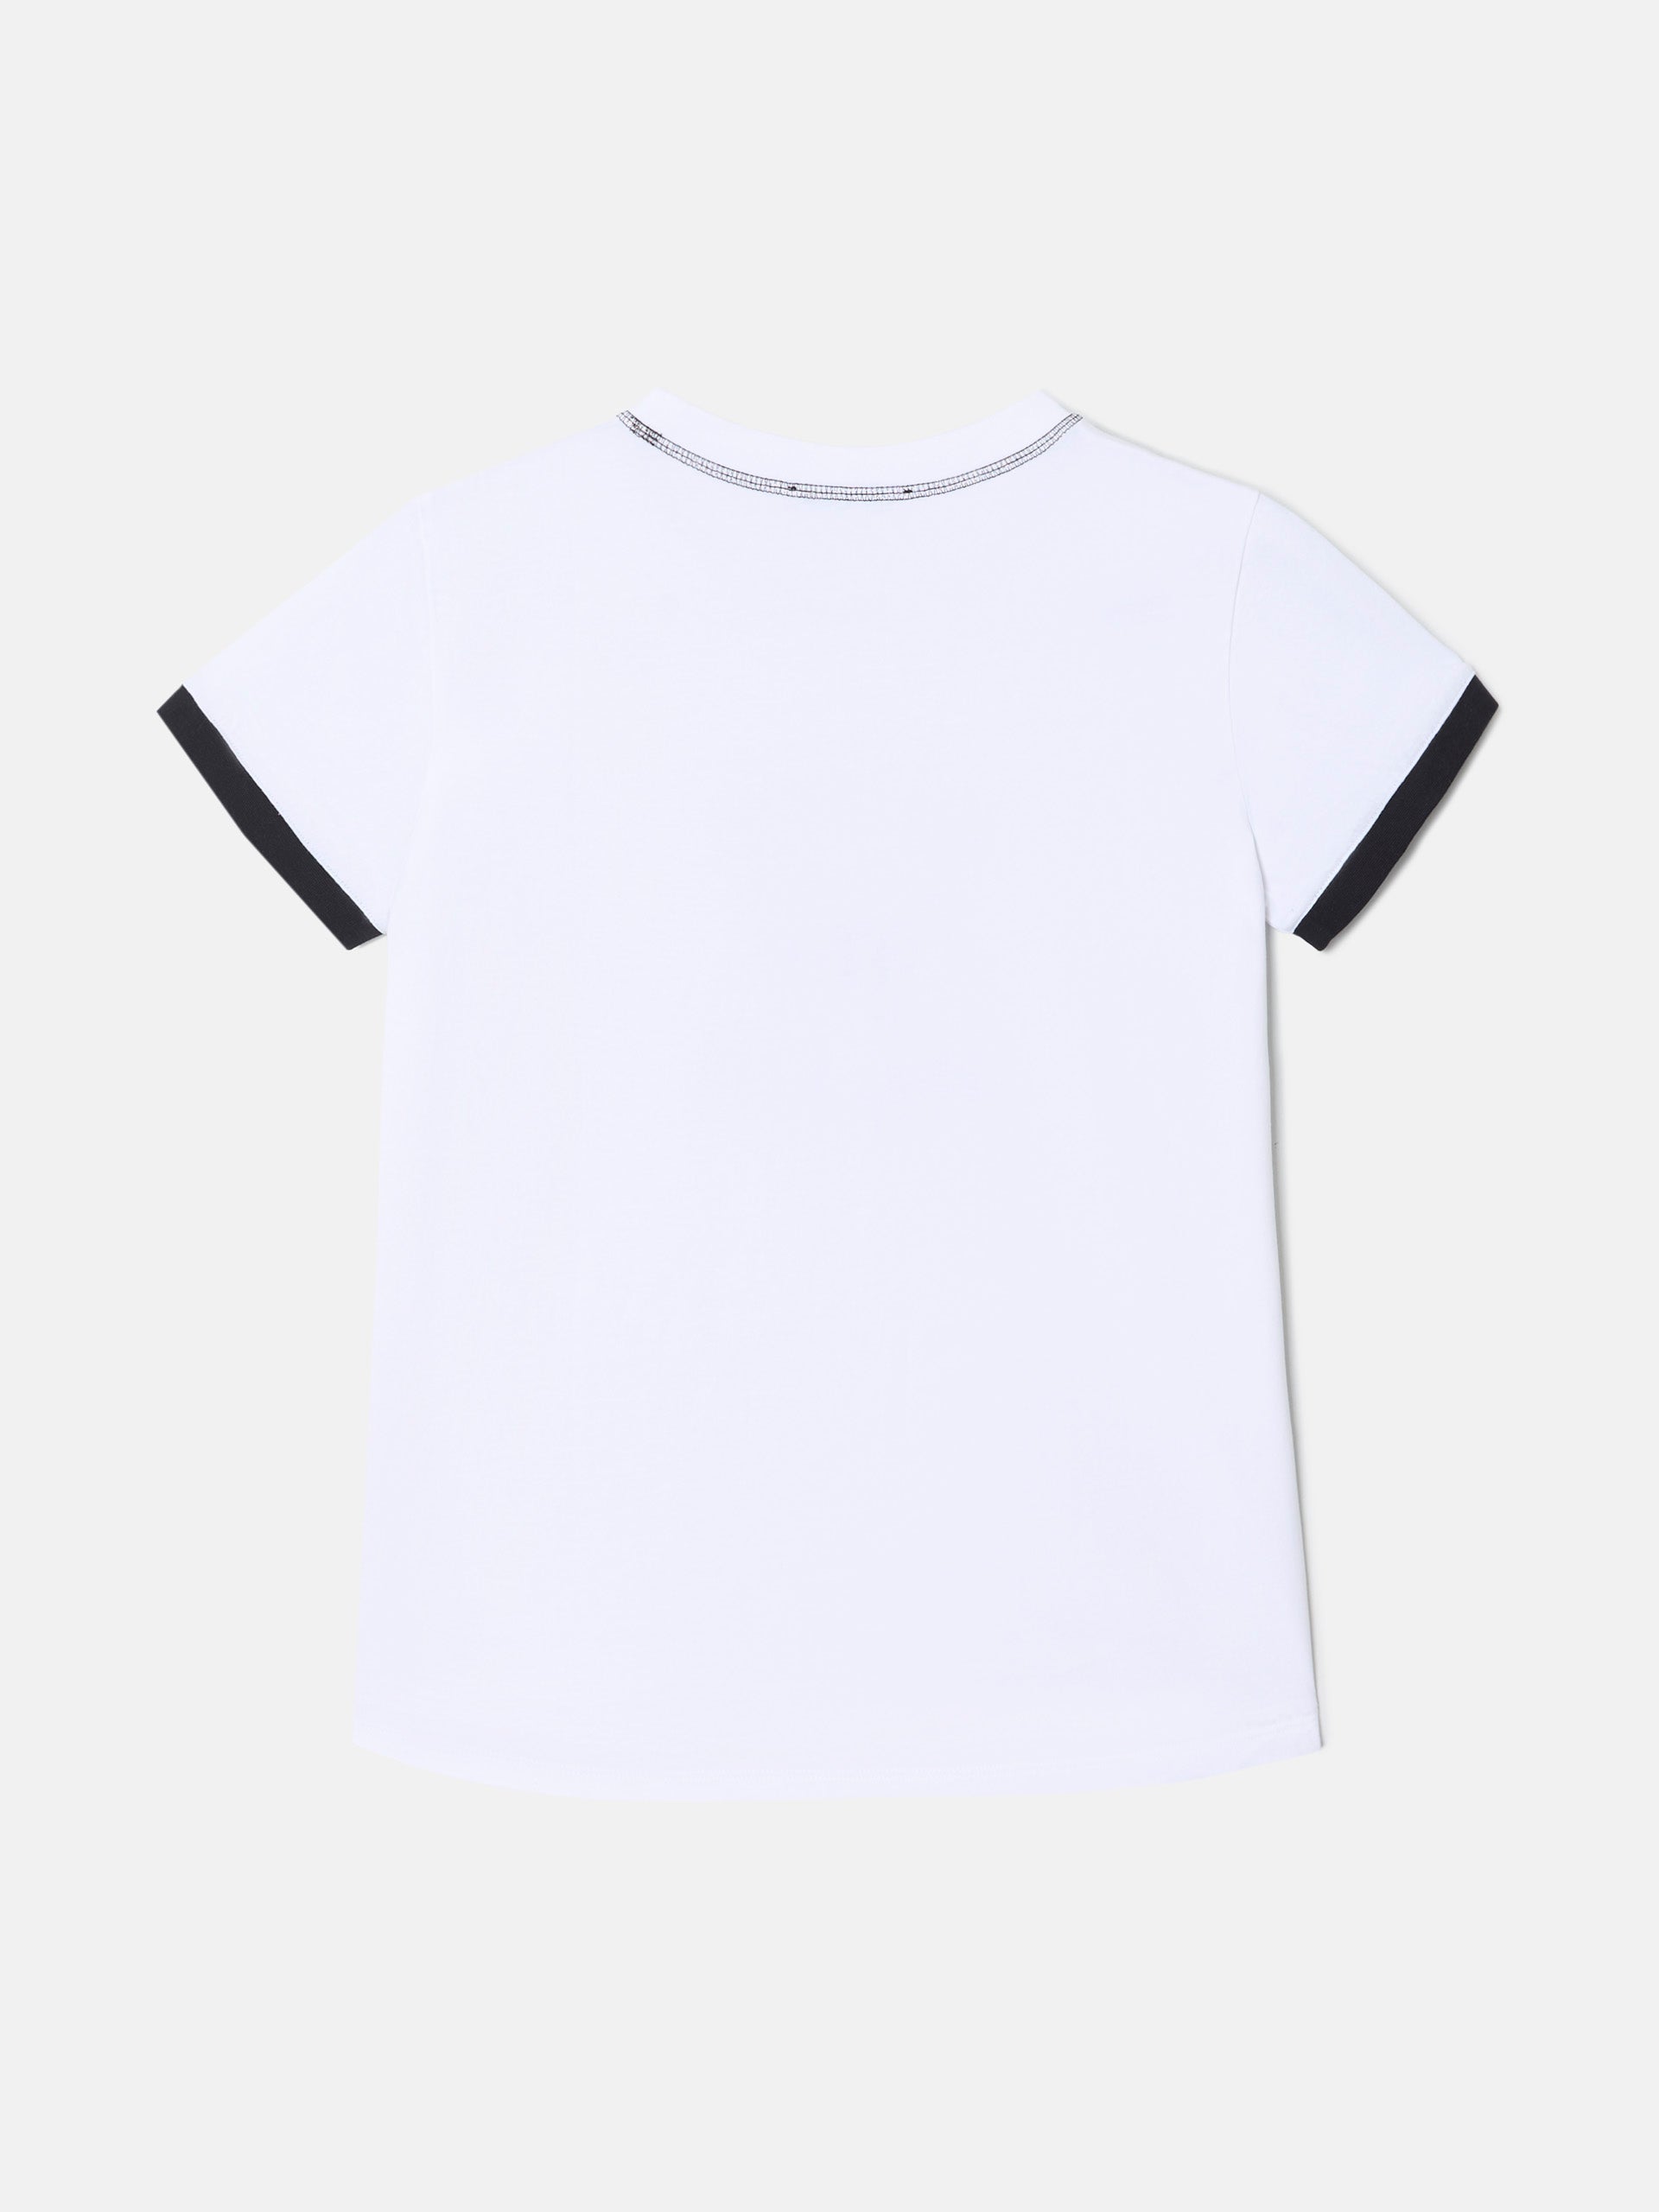 Camiseta woman silbon retro blanca 